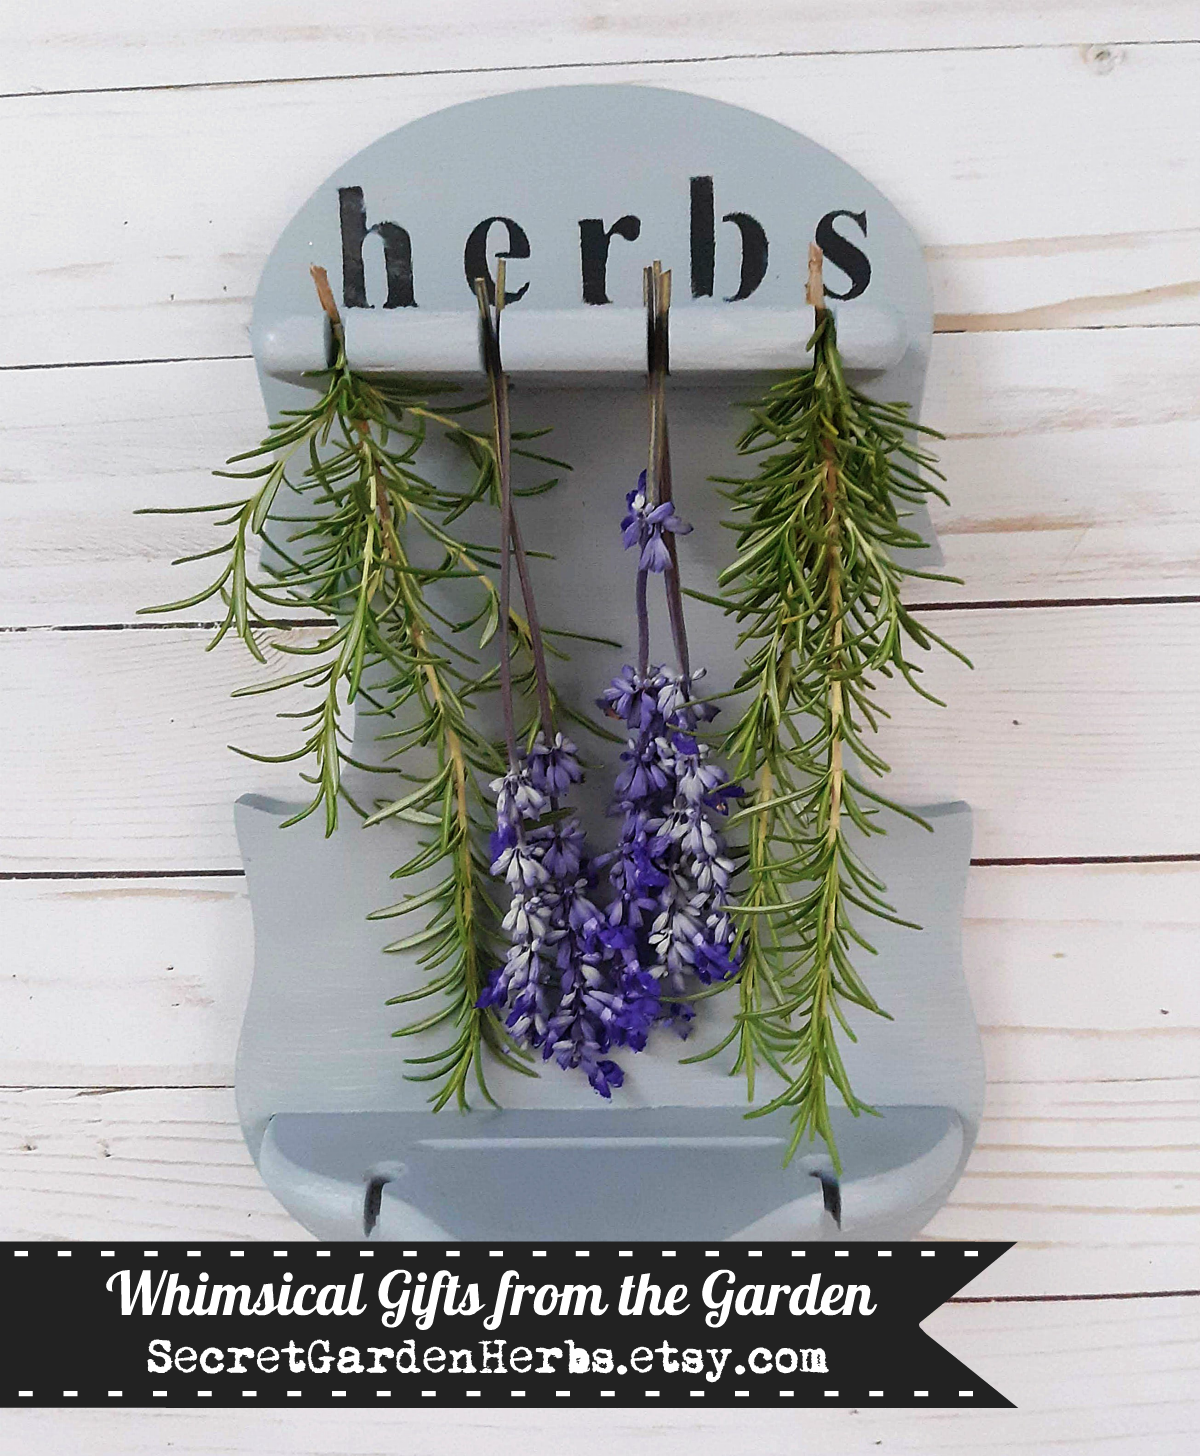 Secret Garden Herbs Etsy shop